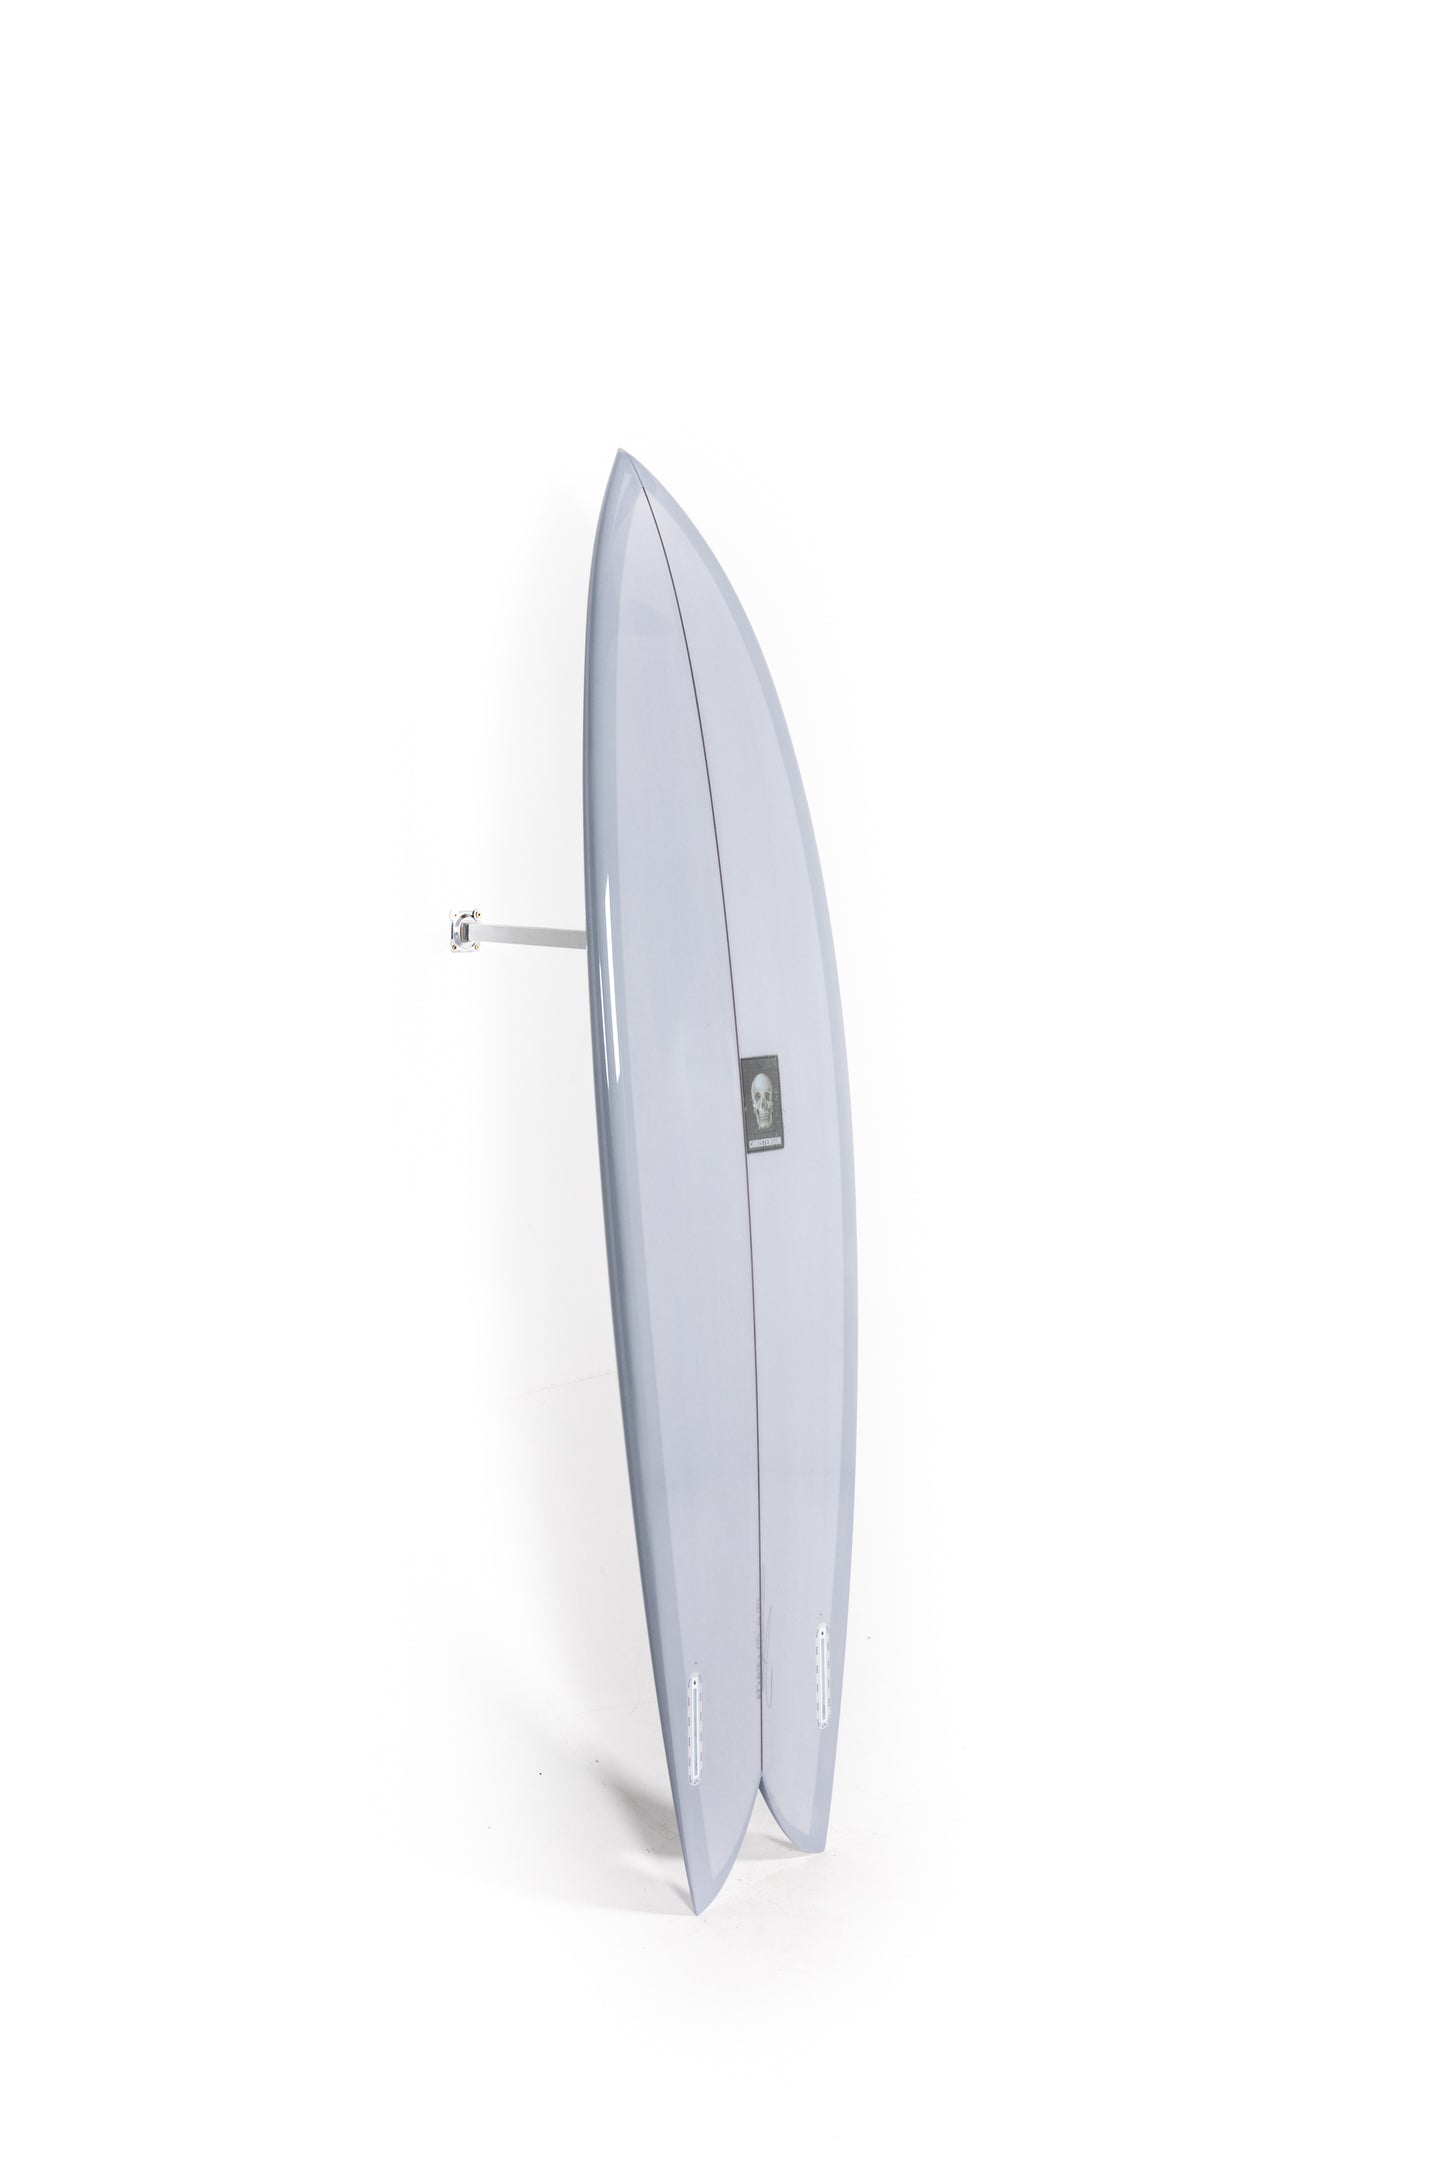 
                  
                    Christenson Surfboards - LONG PHISH - 6'4" x 20 5/8 x 2 9/16 x 35.77L - CX05702
                  
                